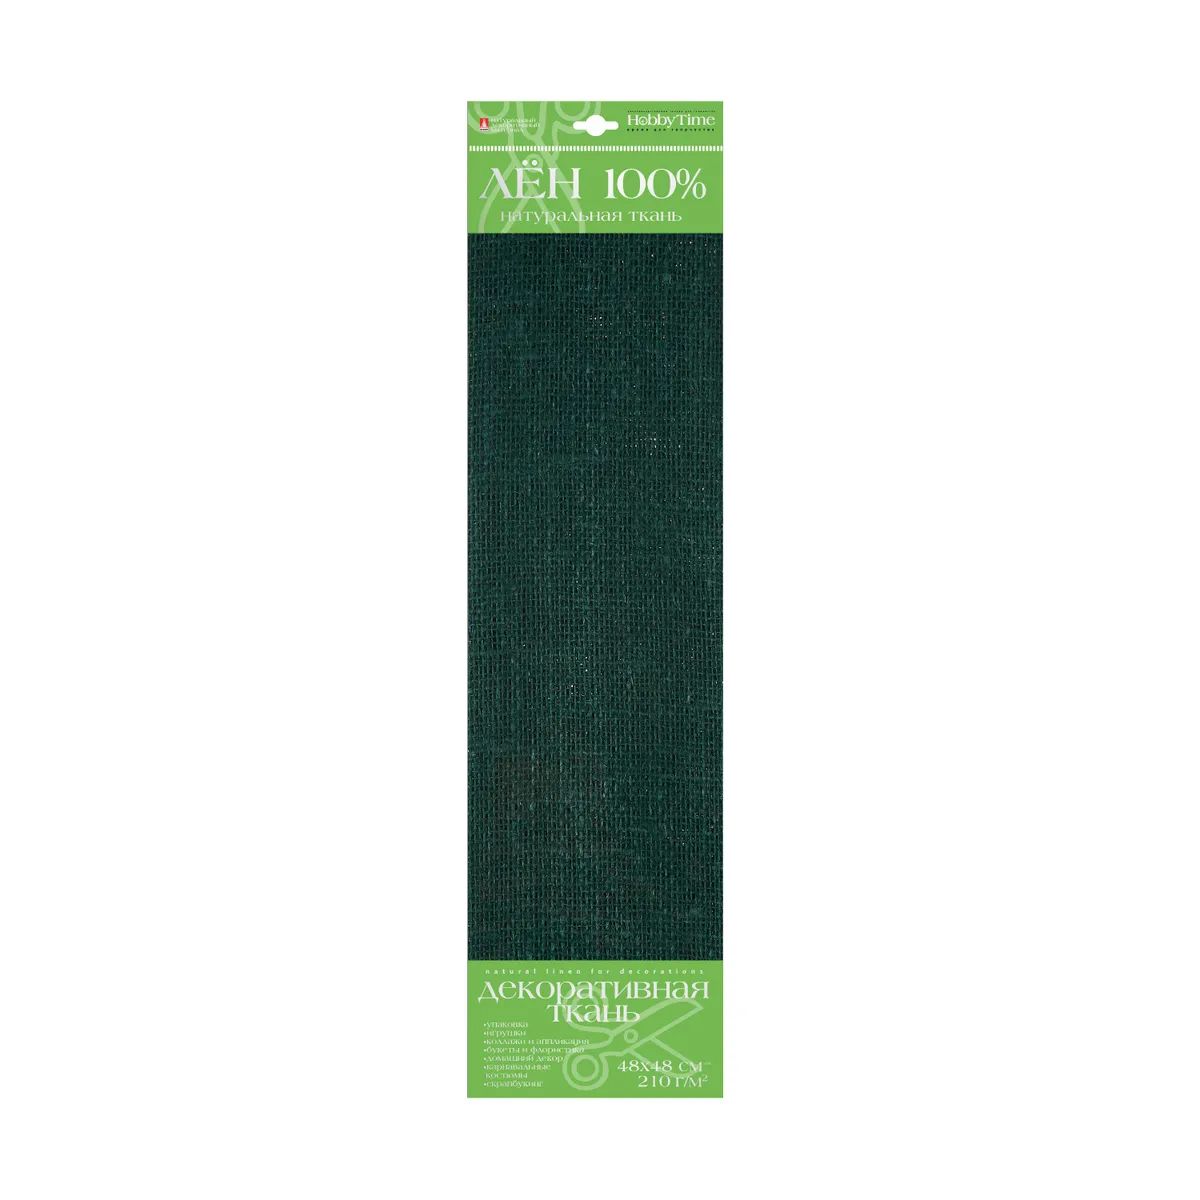 Лён. Декоративная ткань. зеленый 48х48 см